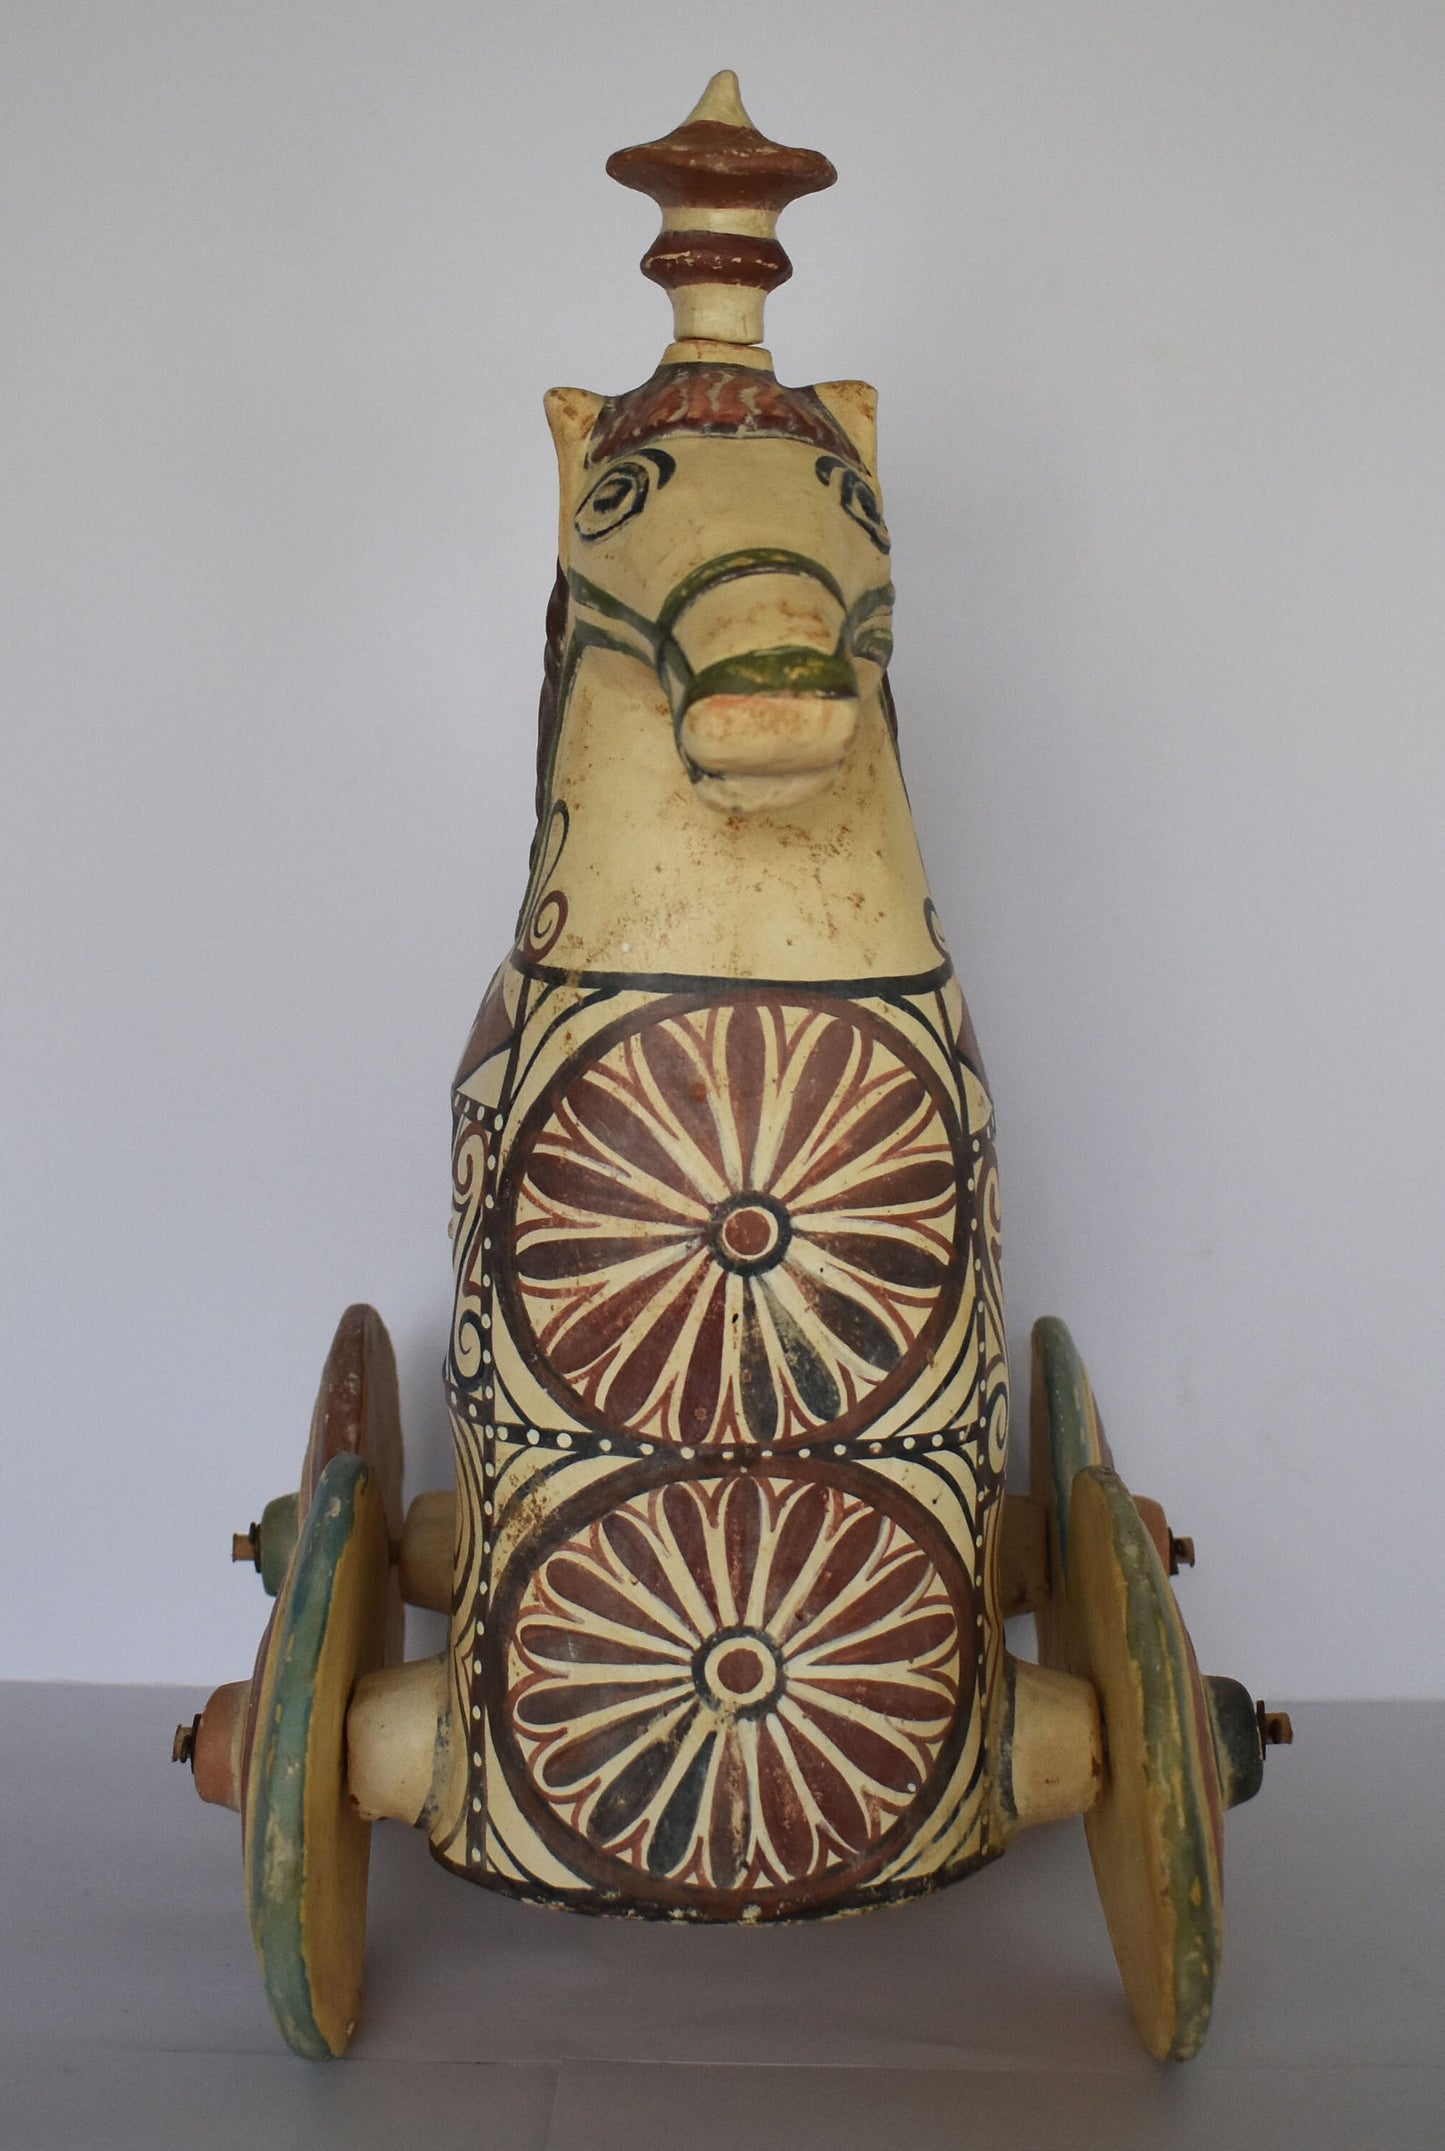 Trojan Horse on Wheels - Huge Hollow Greek Horse - Trojan War - Homer’s Iliad - Representation of Ancient Greek Vessel - Ceramic Artifact